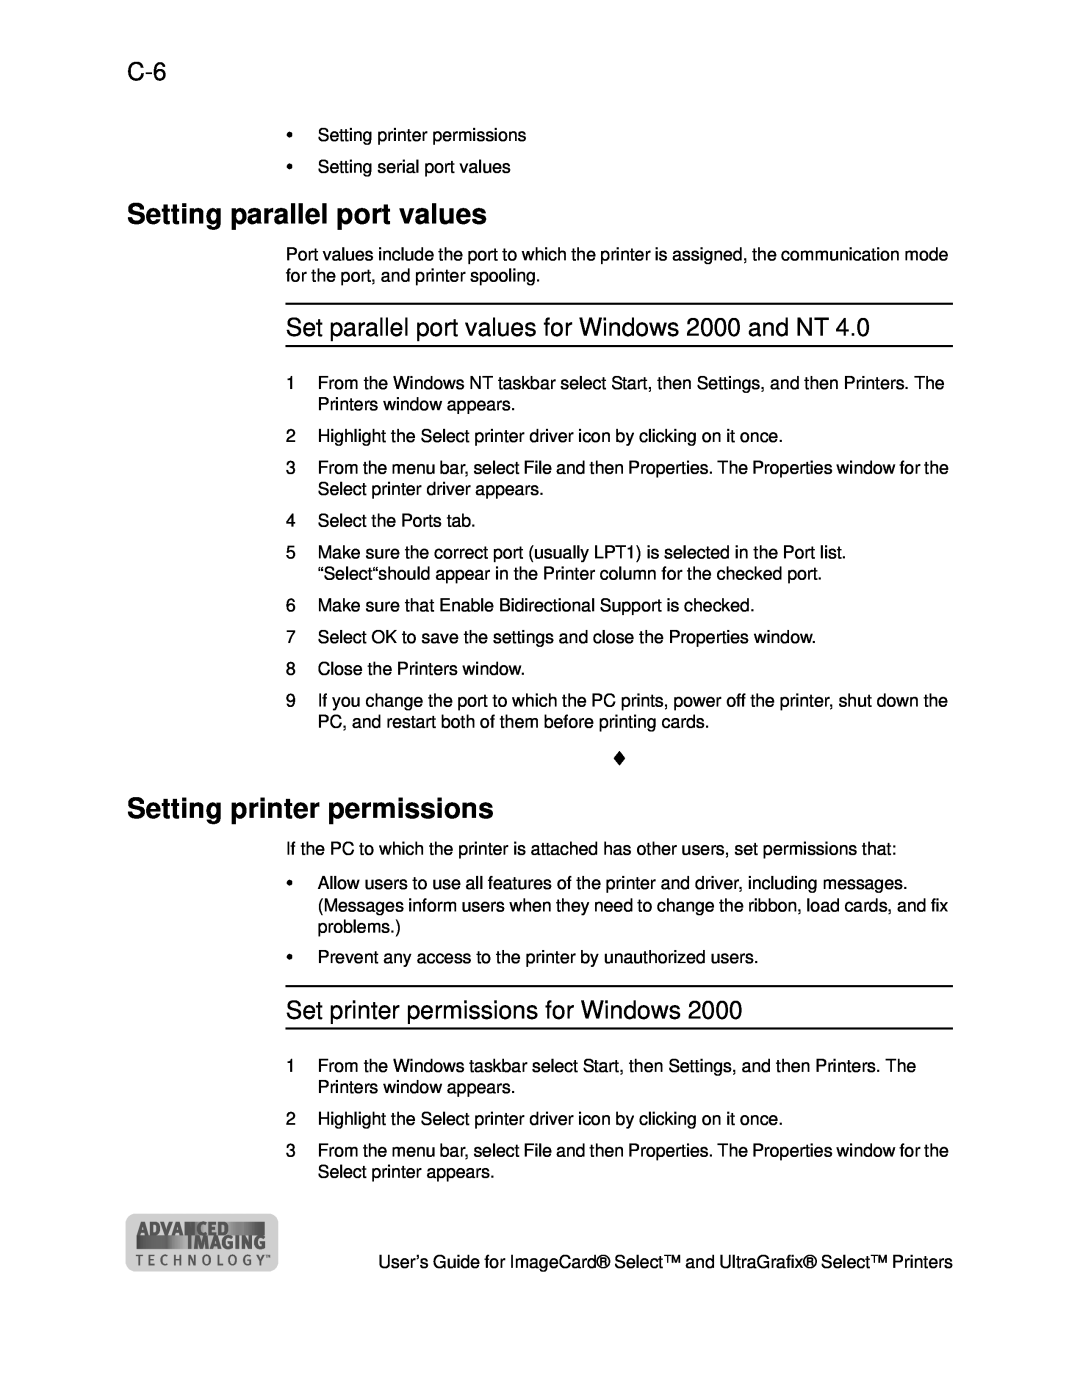 Datacard Group ImageCard SelectTM and UltraGrafix SelectTM Printers manual Setting parallel port values 